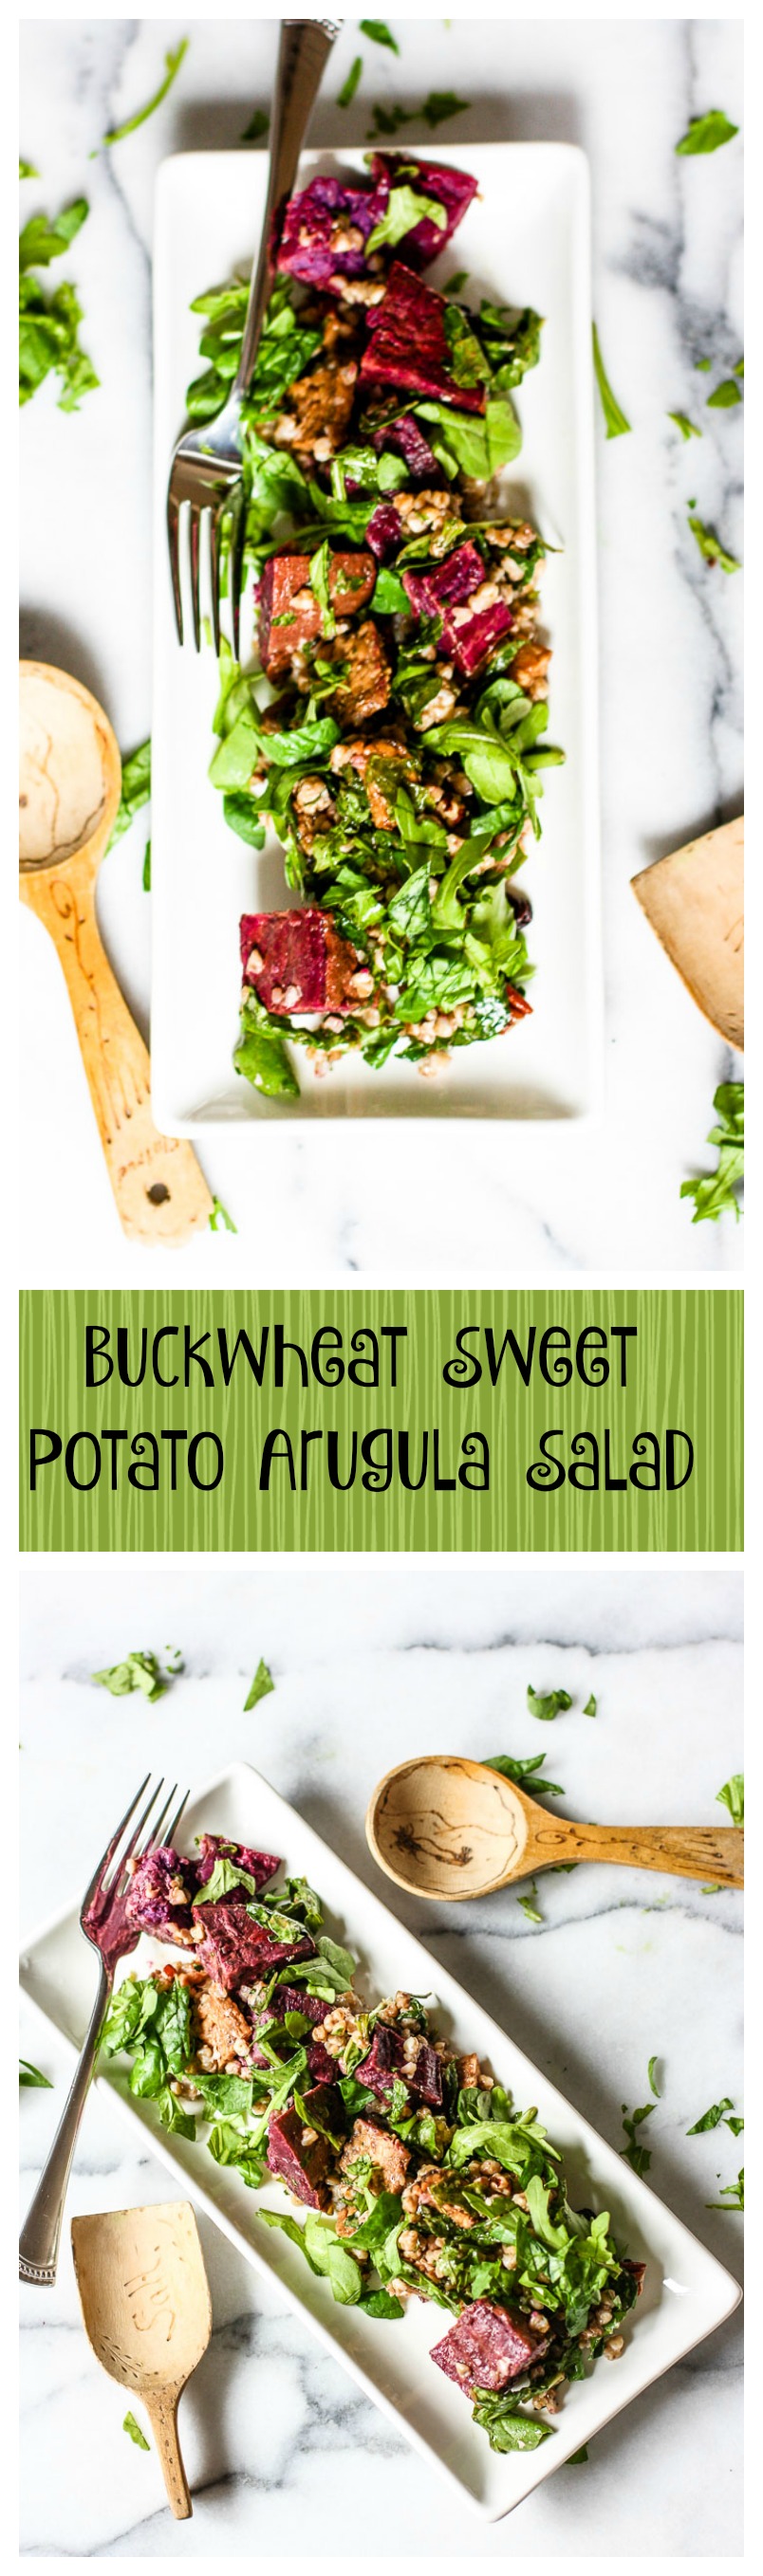 buckwheat sweet potato arugula salad